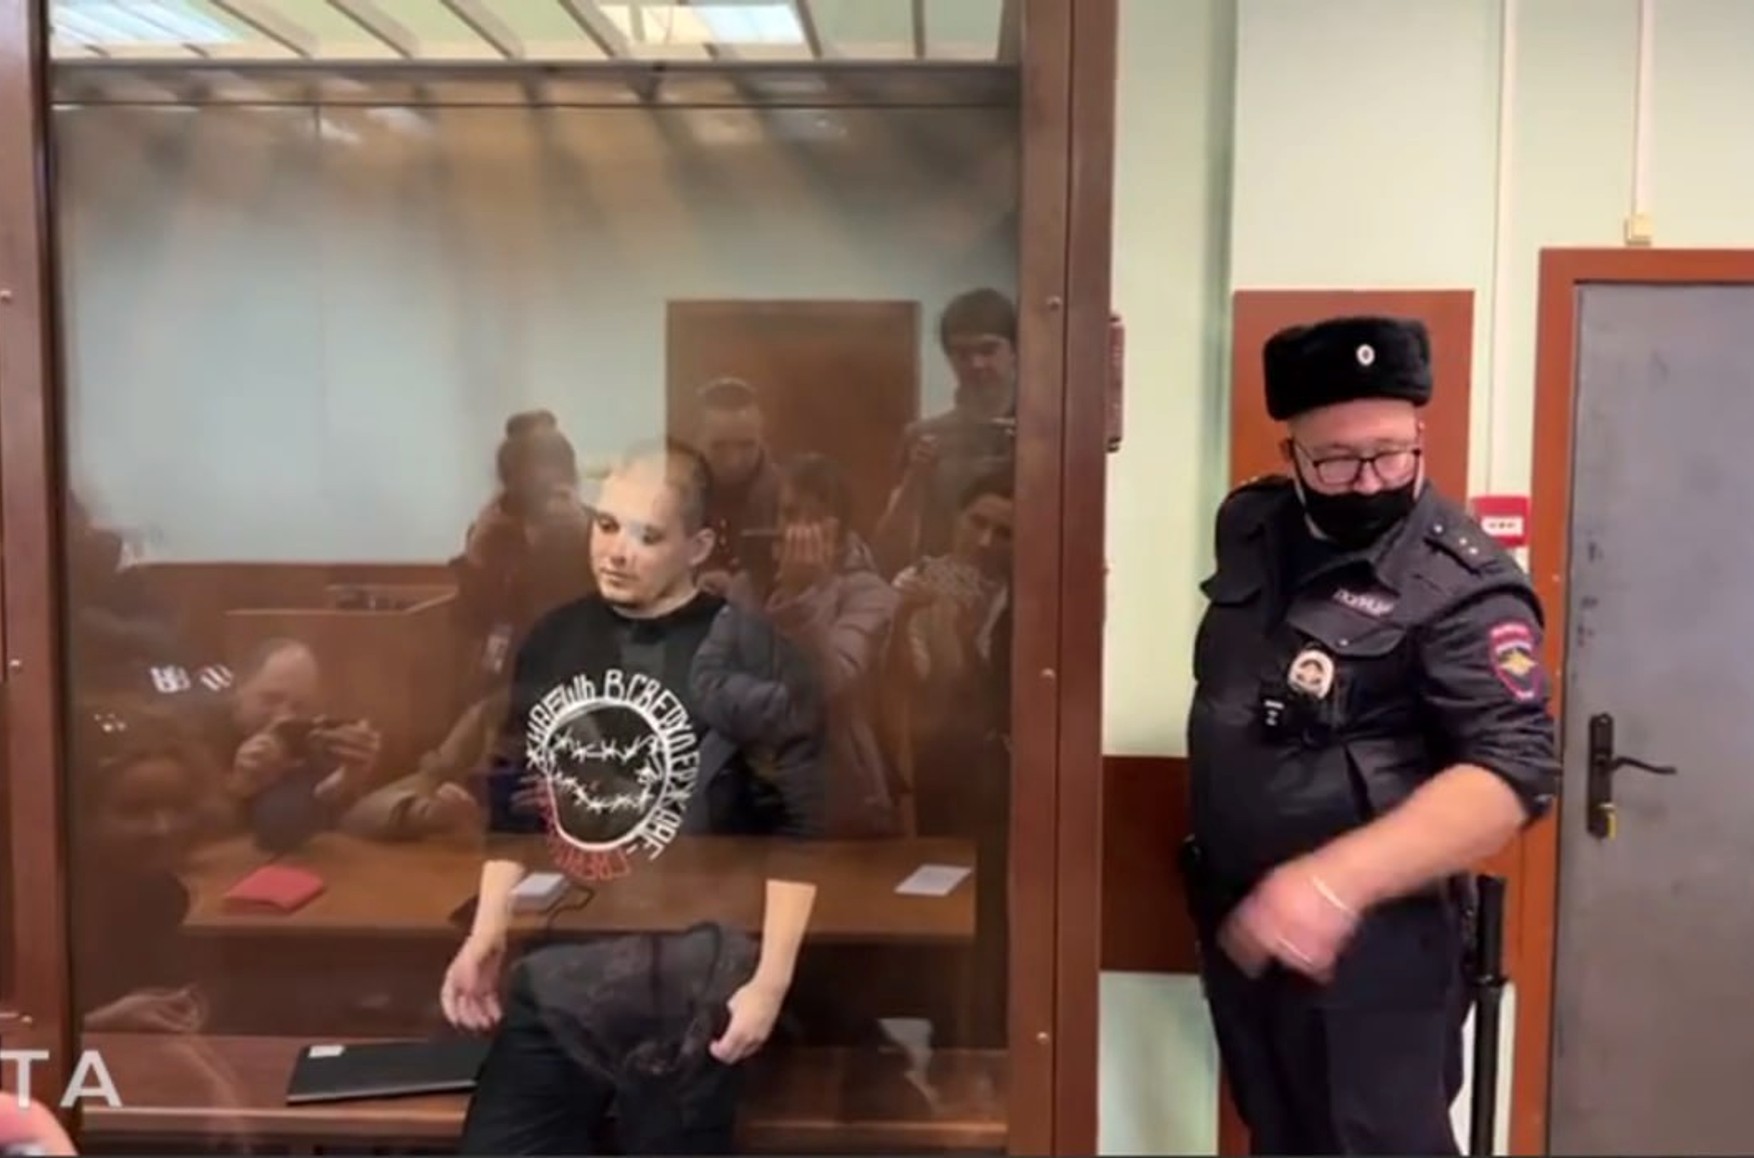 Sota: Автора «Протестного МГУ» избил полицейский Алексей Жалнин. Его имя занесено на доску почета